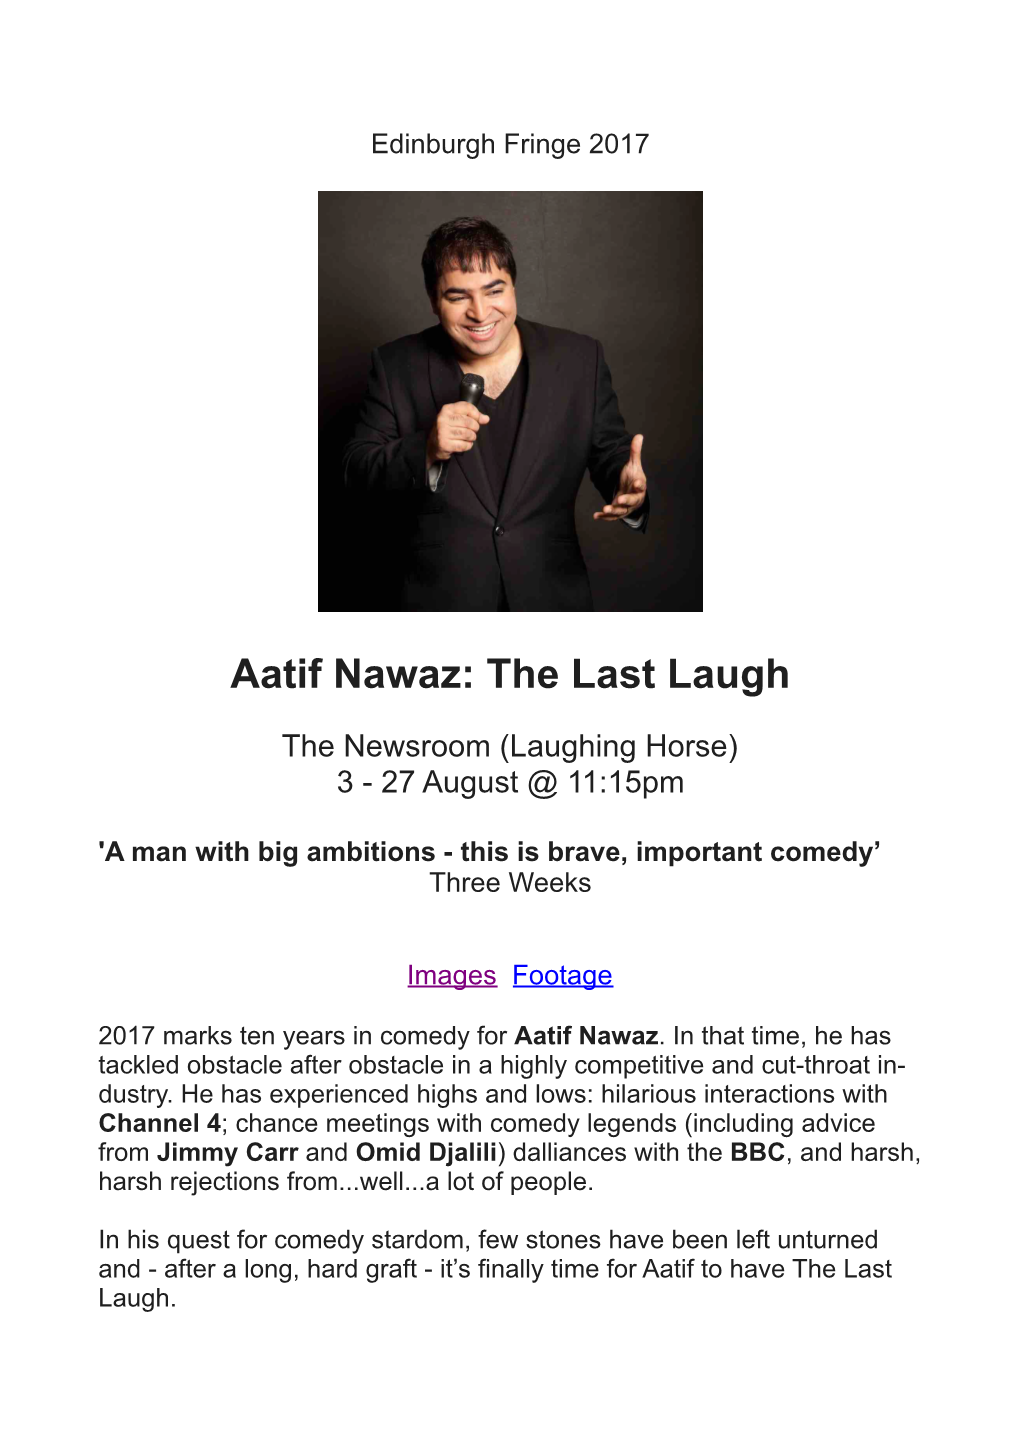 Aatif Nawaz Edinburgh Fringe 2017 Press Release